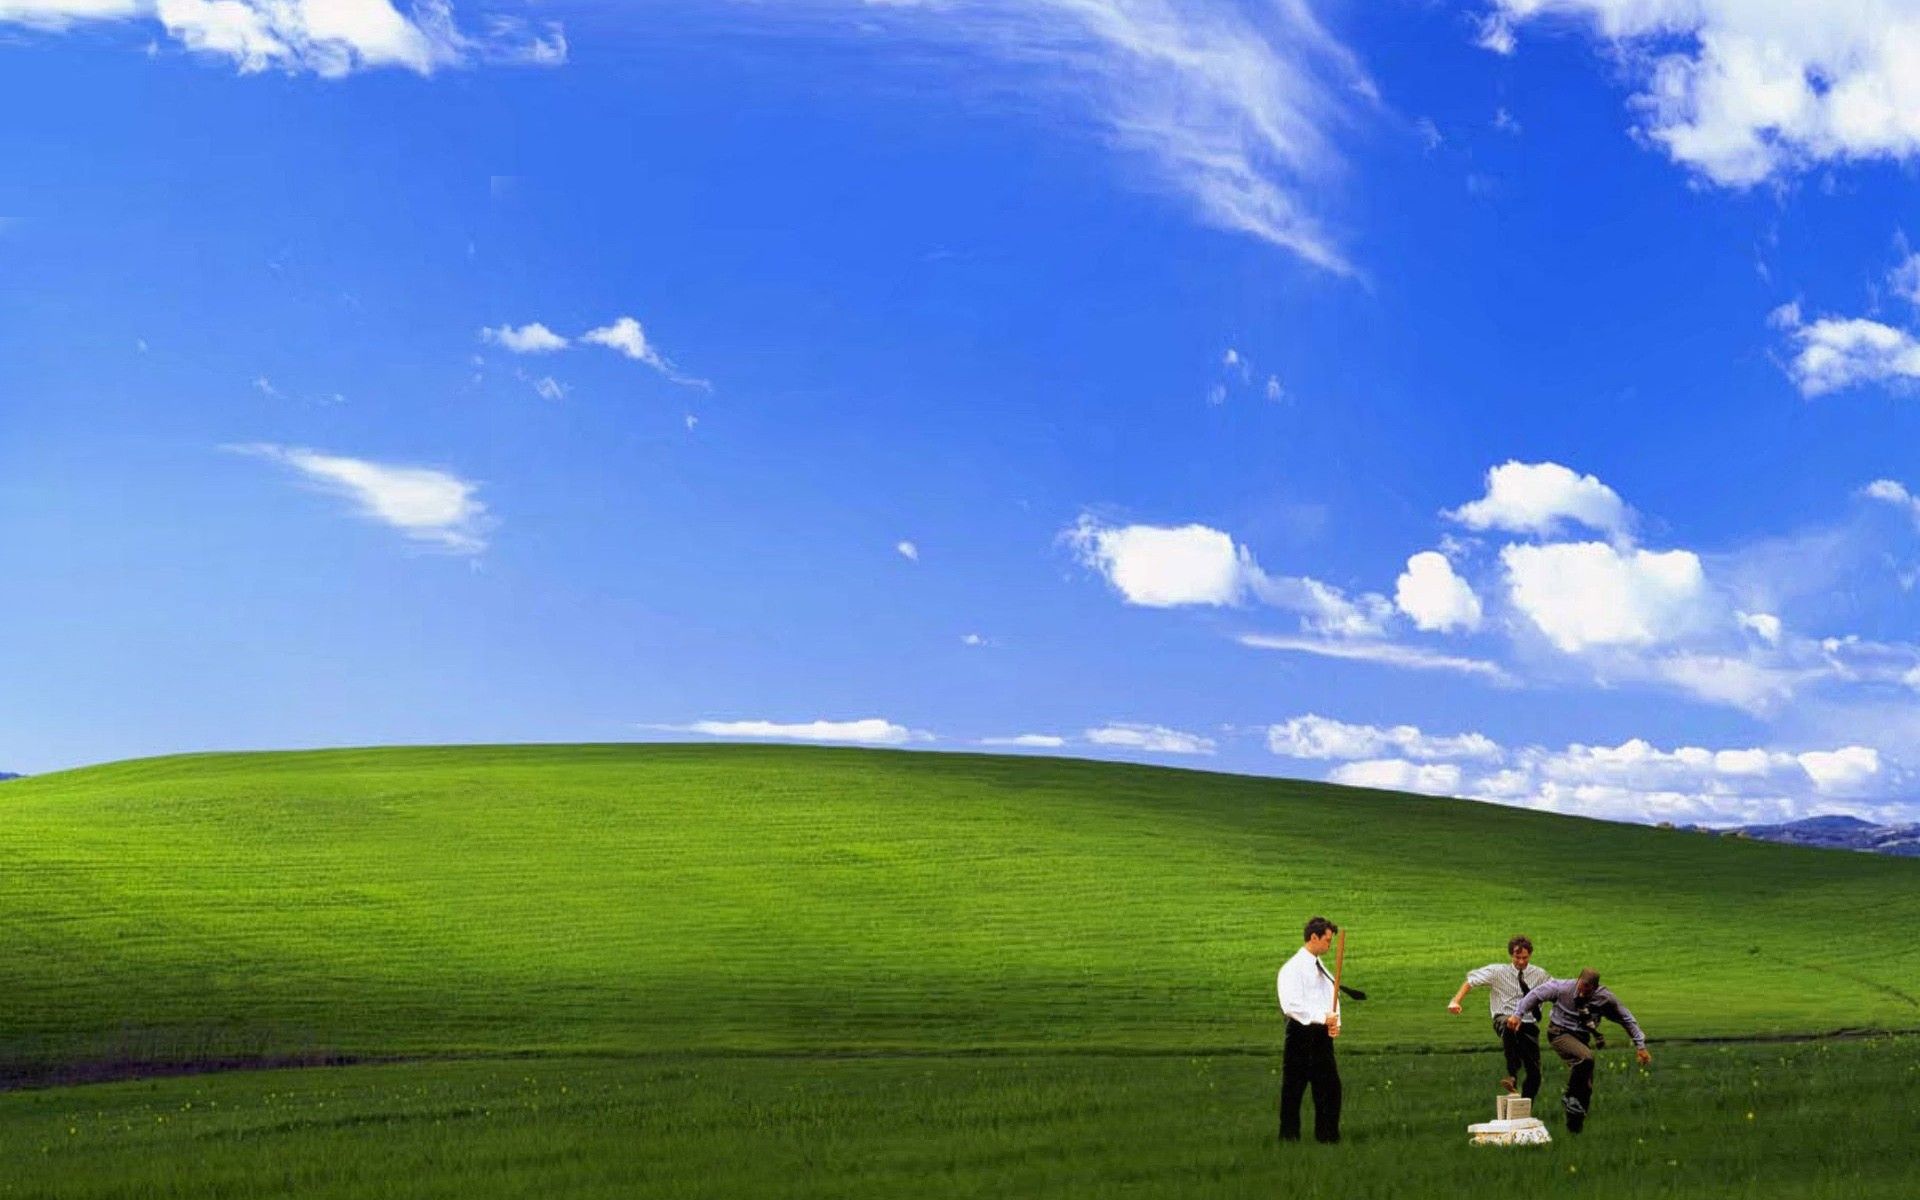 49+] Windows XP Bliss Wallpaper Now - WallpaperSafari